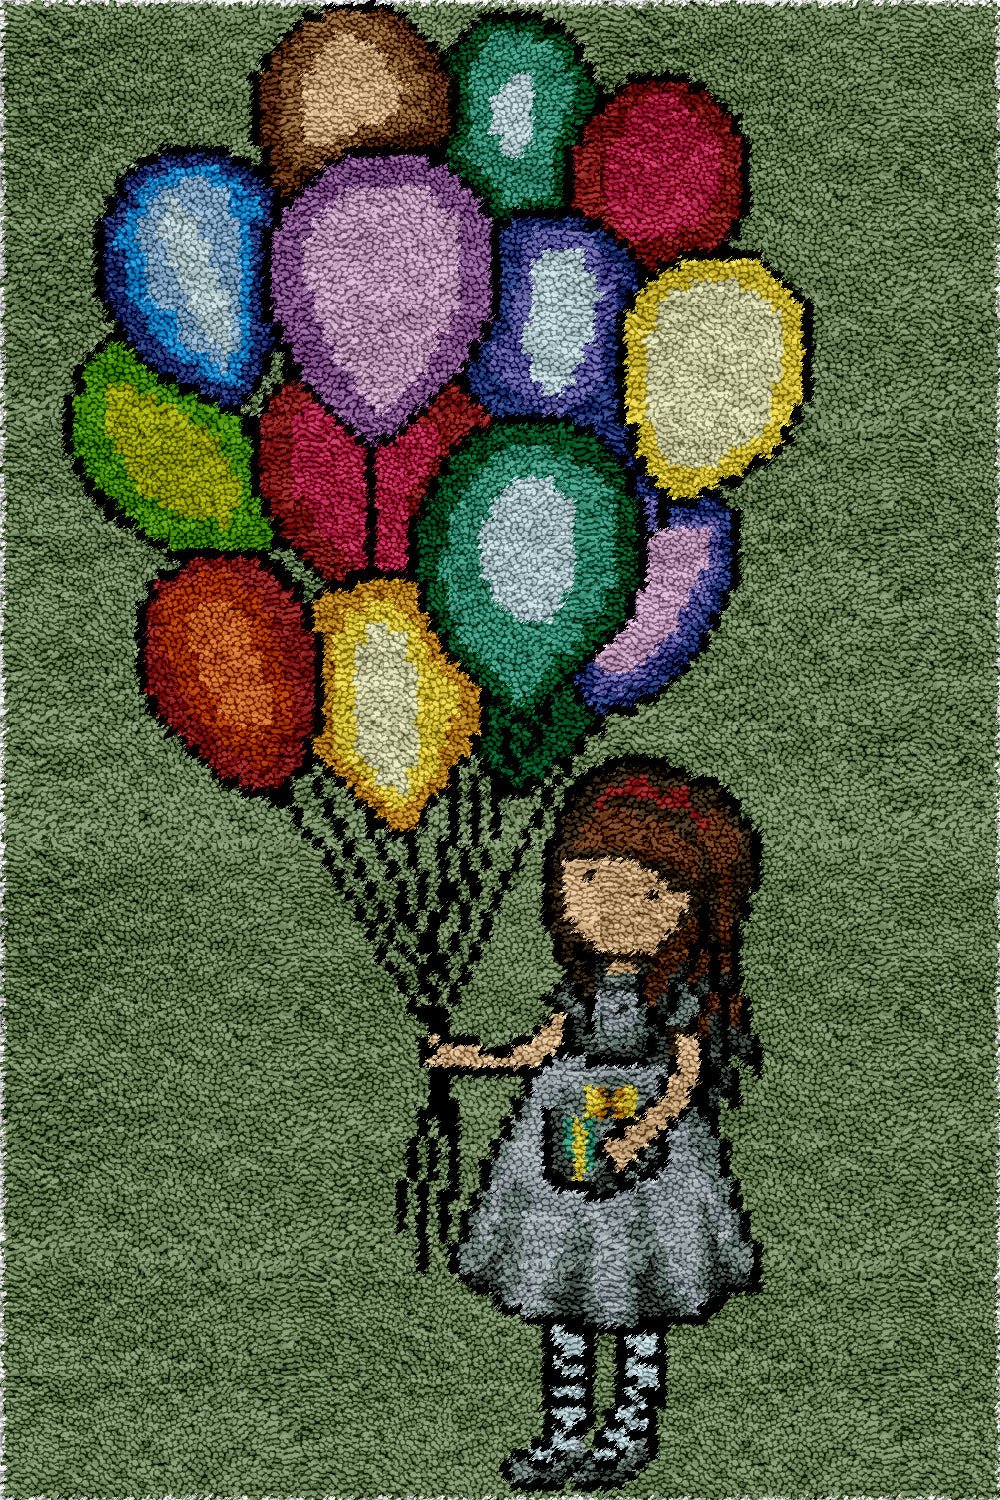 Girl and Balloons - Latch Hook Rug Kit - diy-latch-hook